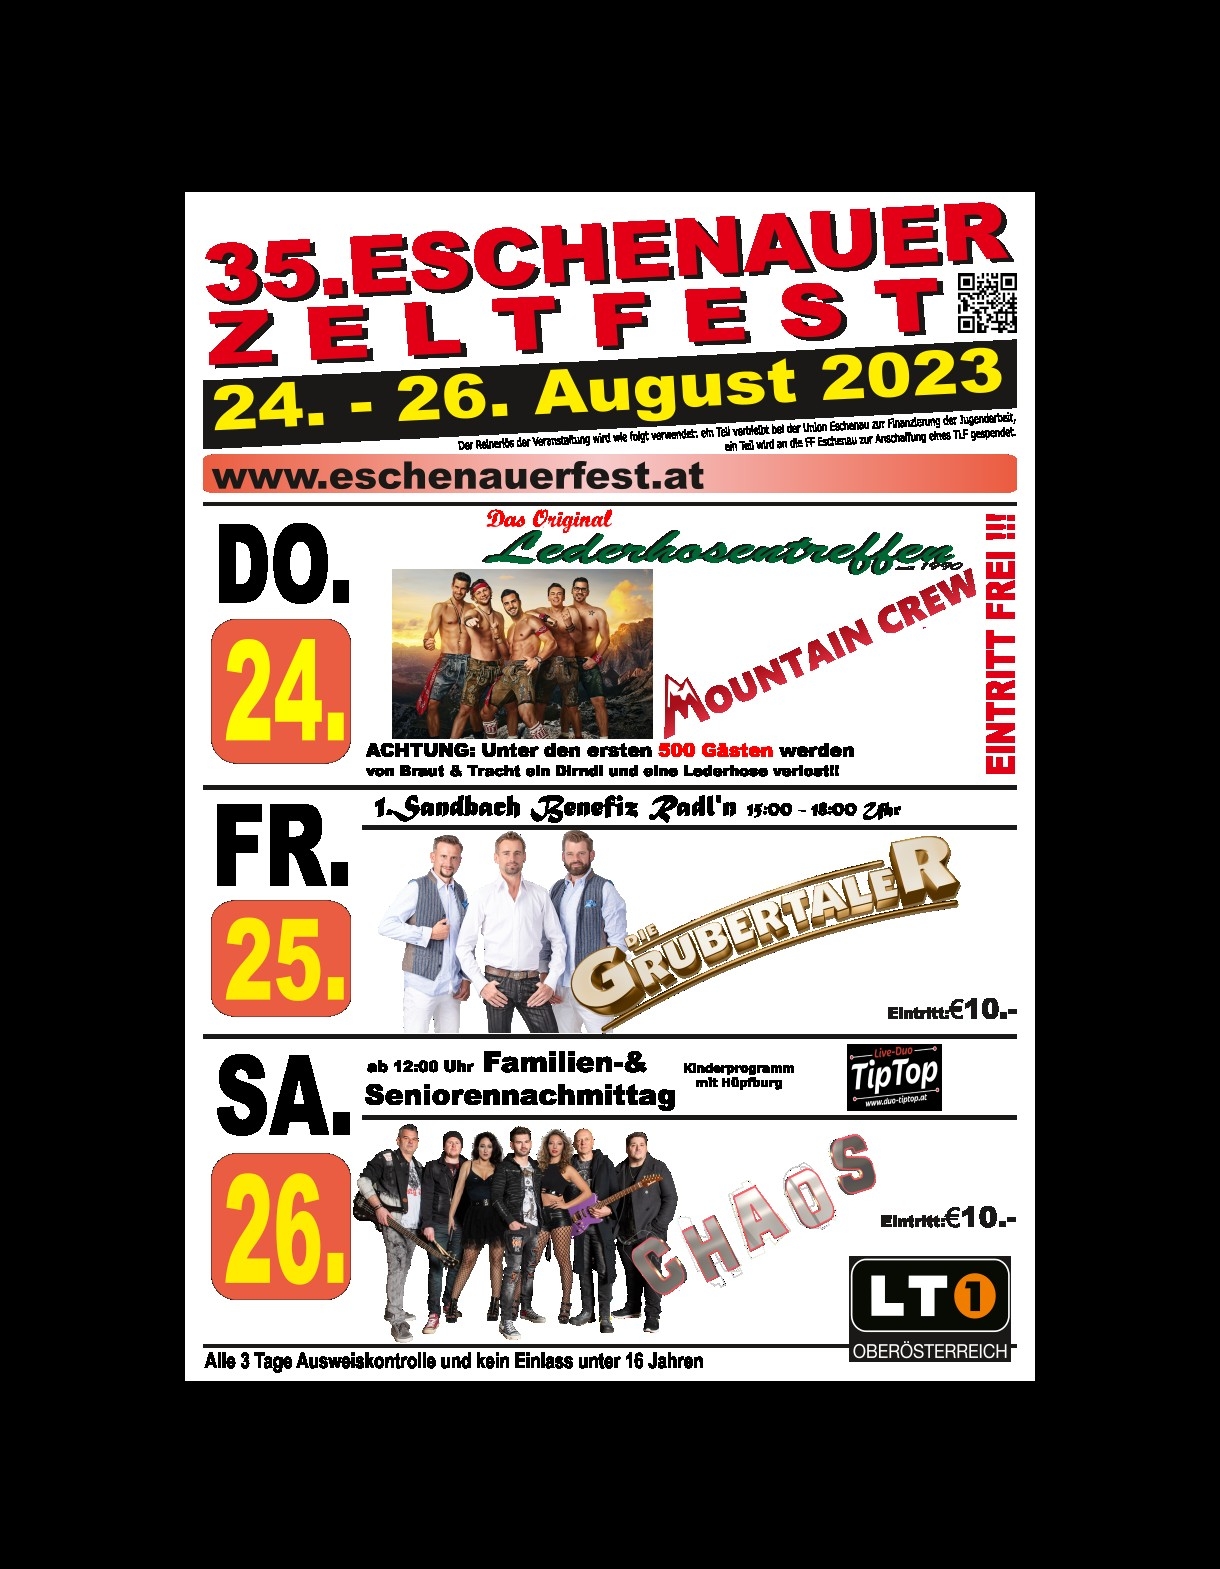 Eschenauer Zeltfest 2023